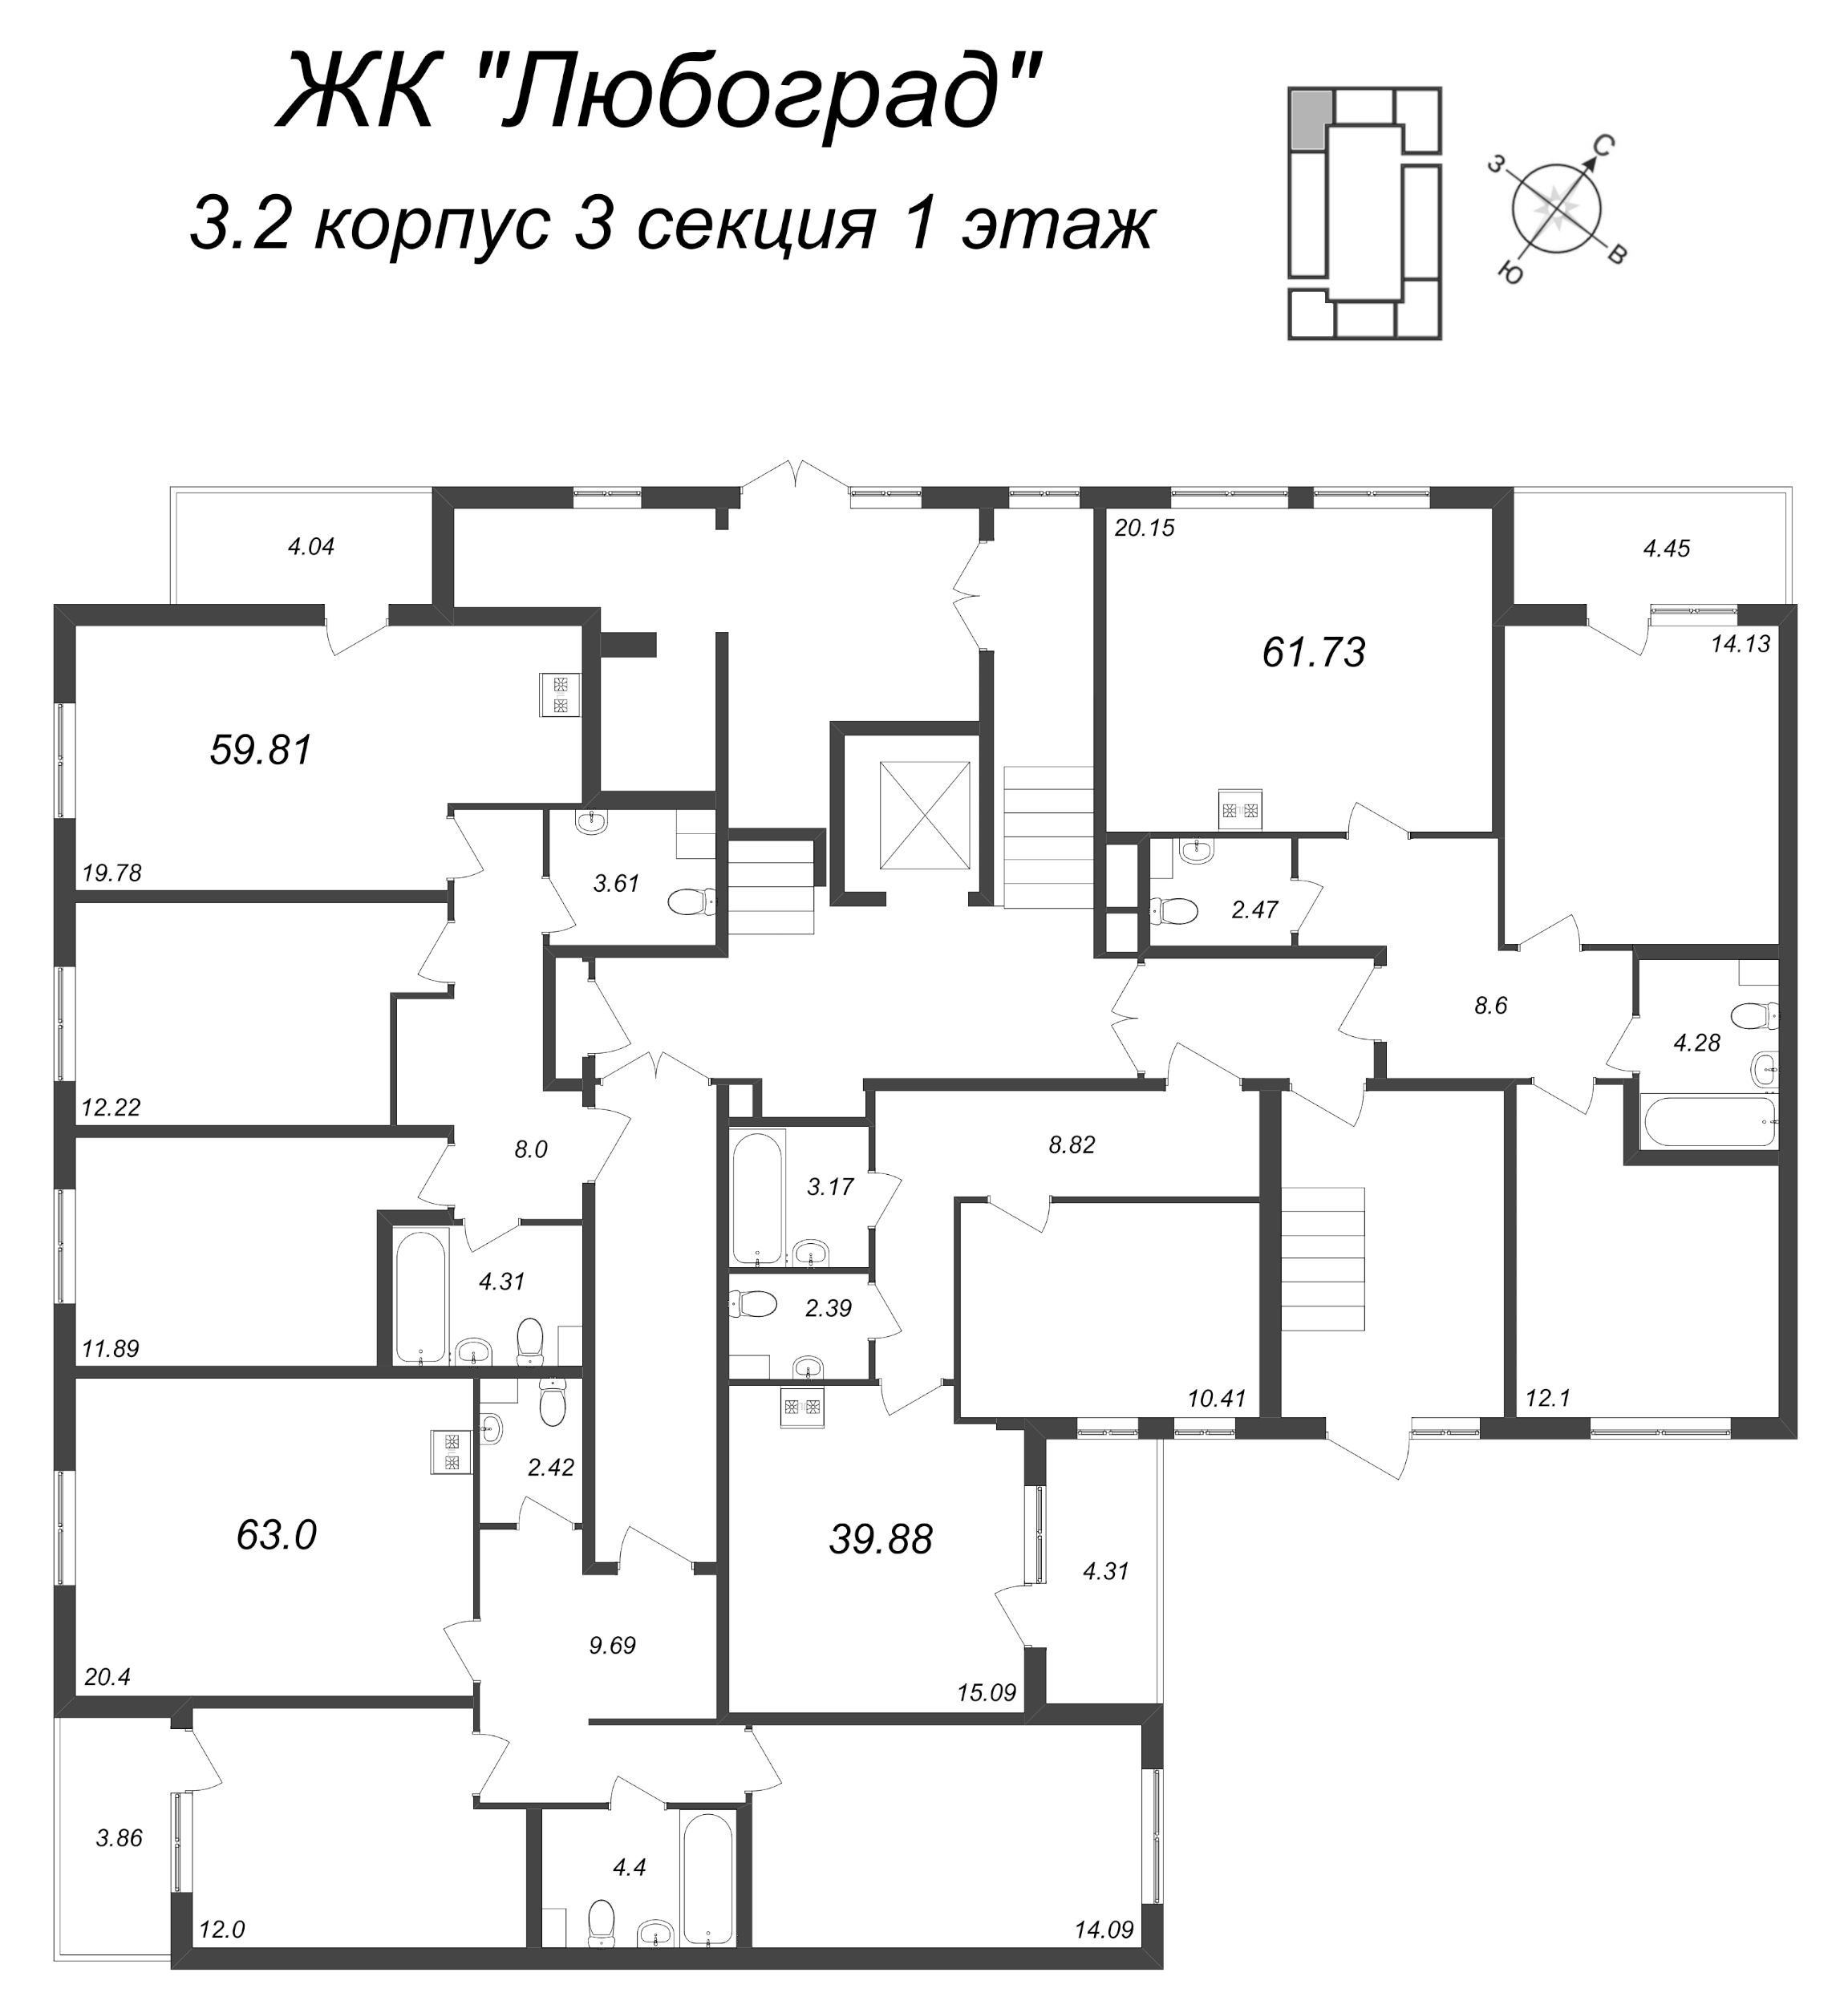 2-комнатная (Евро) квартира, 39.88 м² - планировка этажа